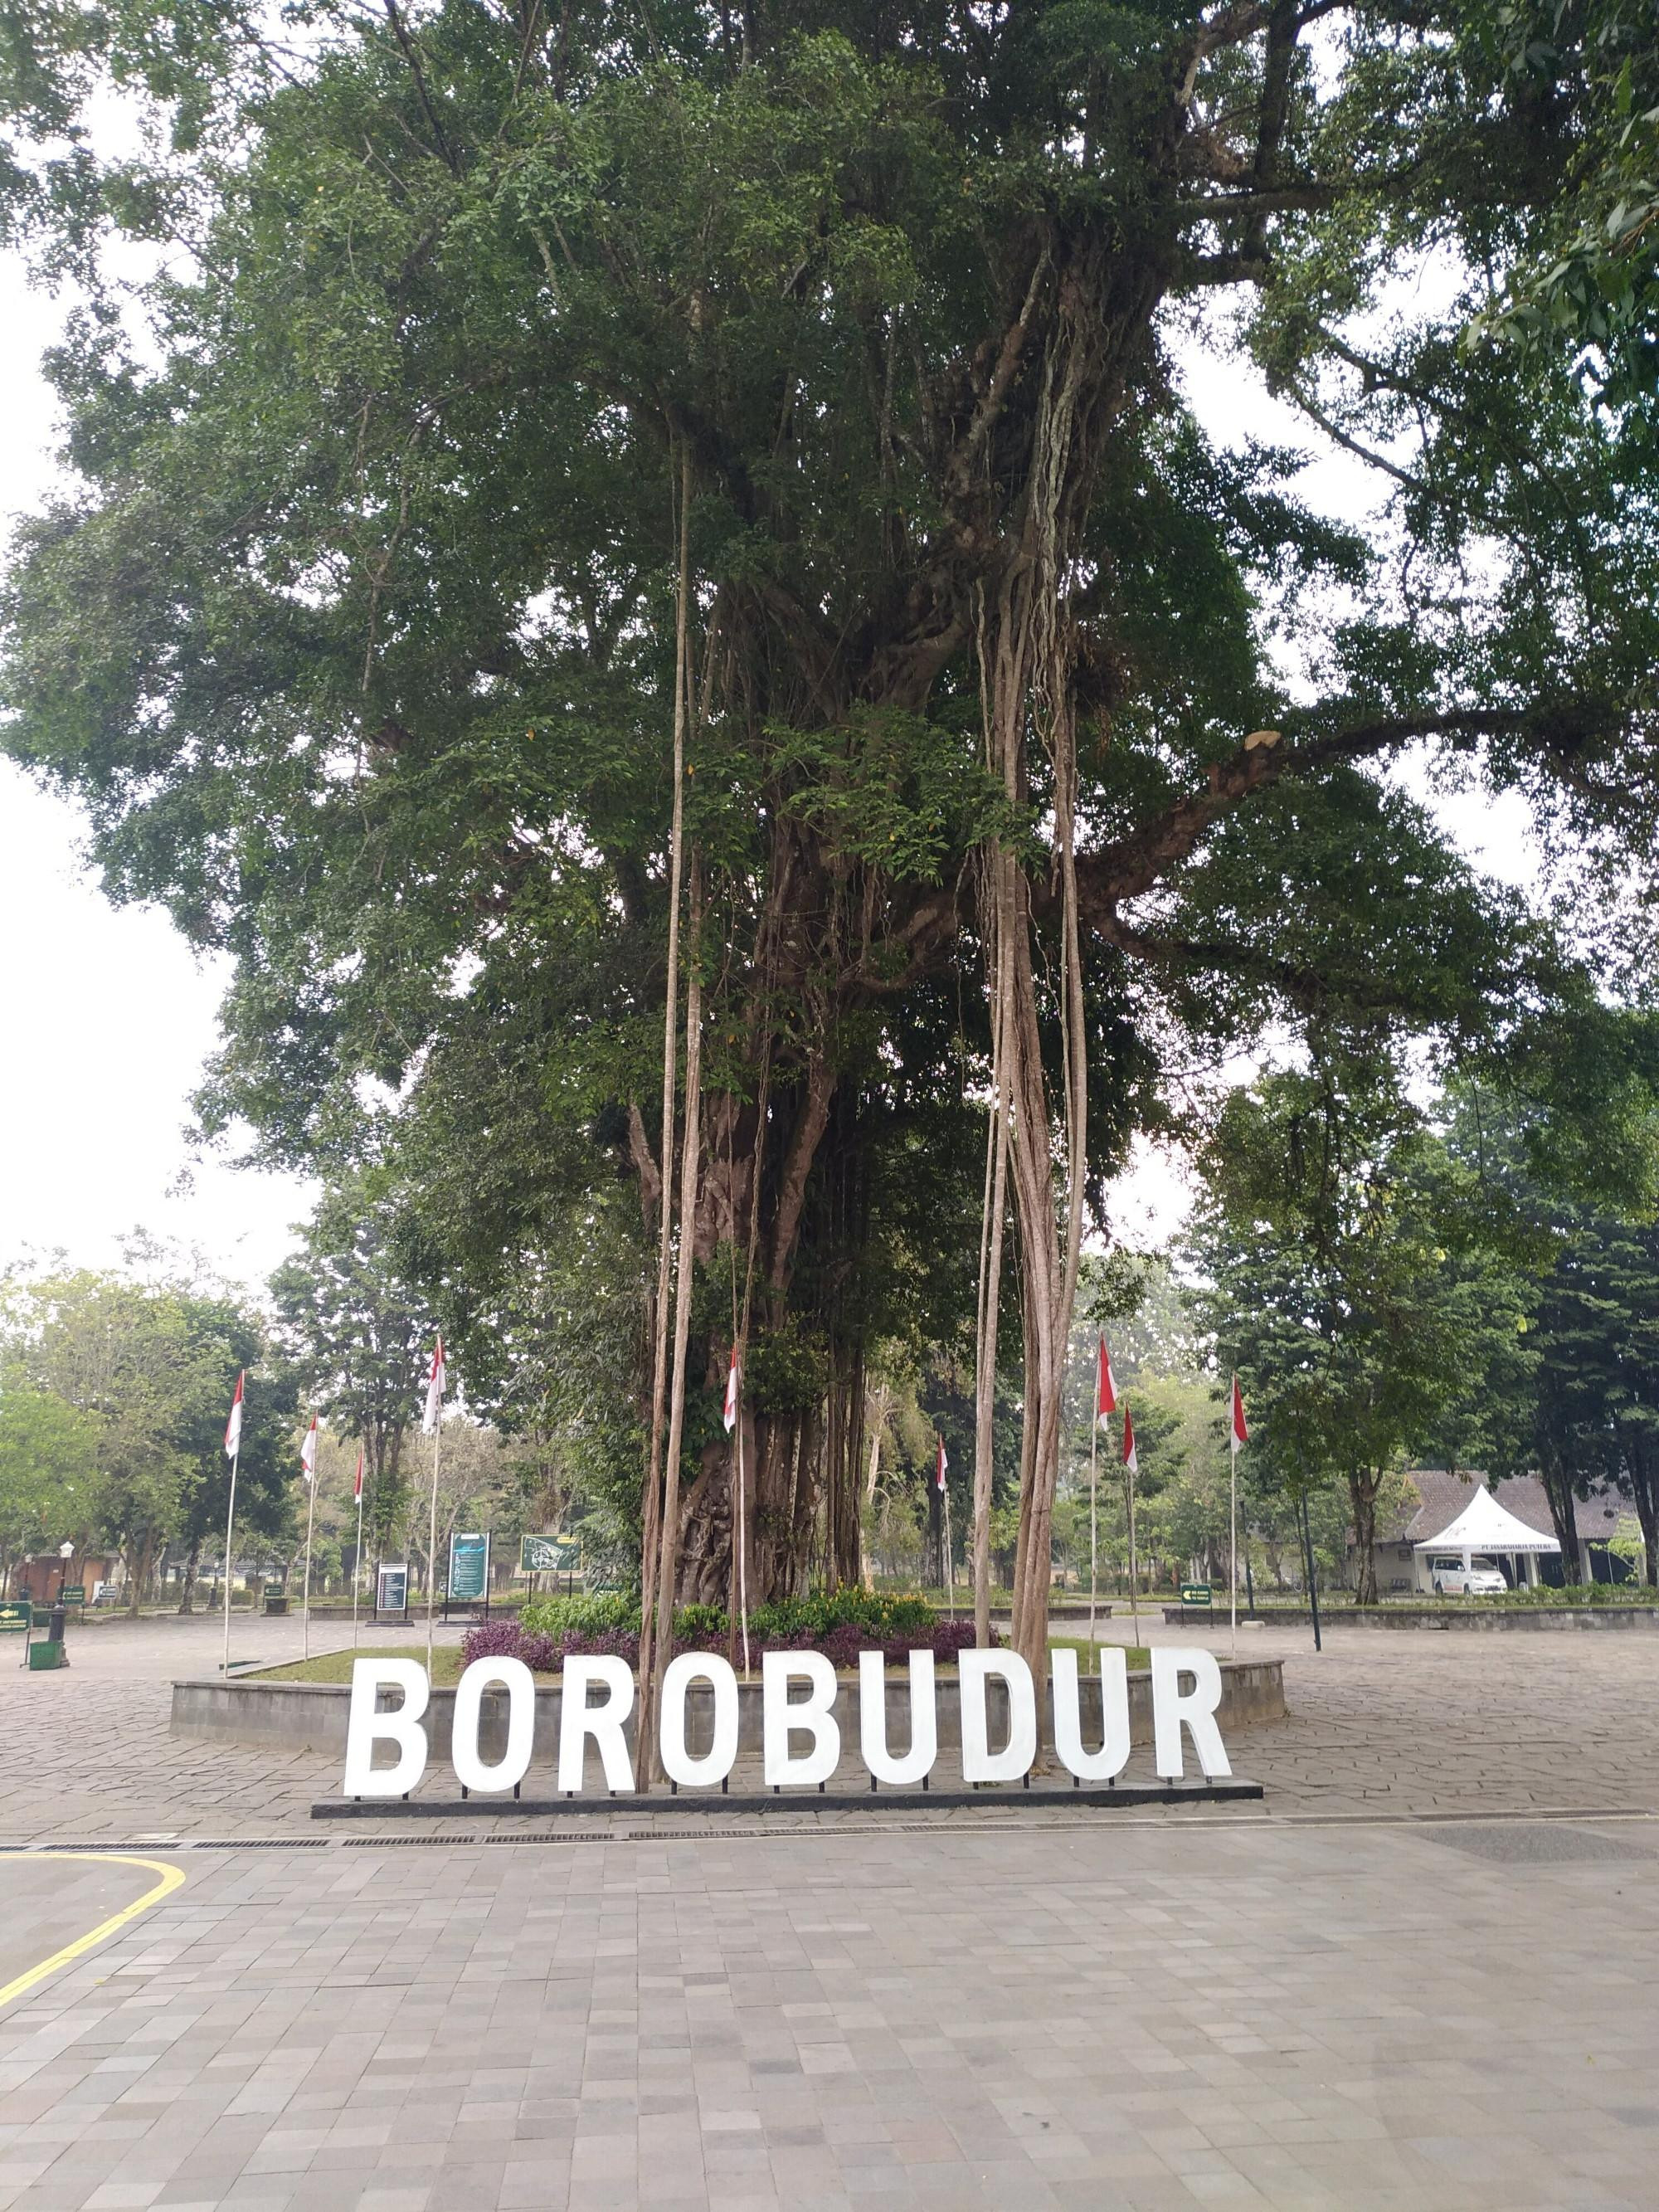 on the way to Borobudur